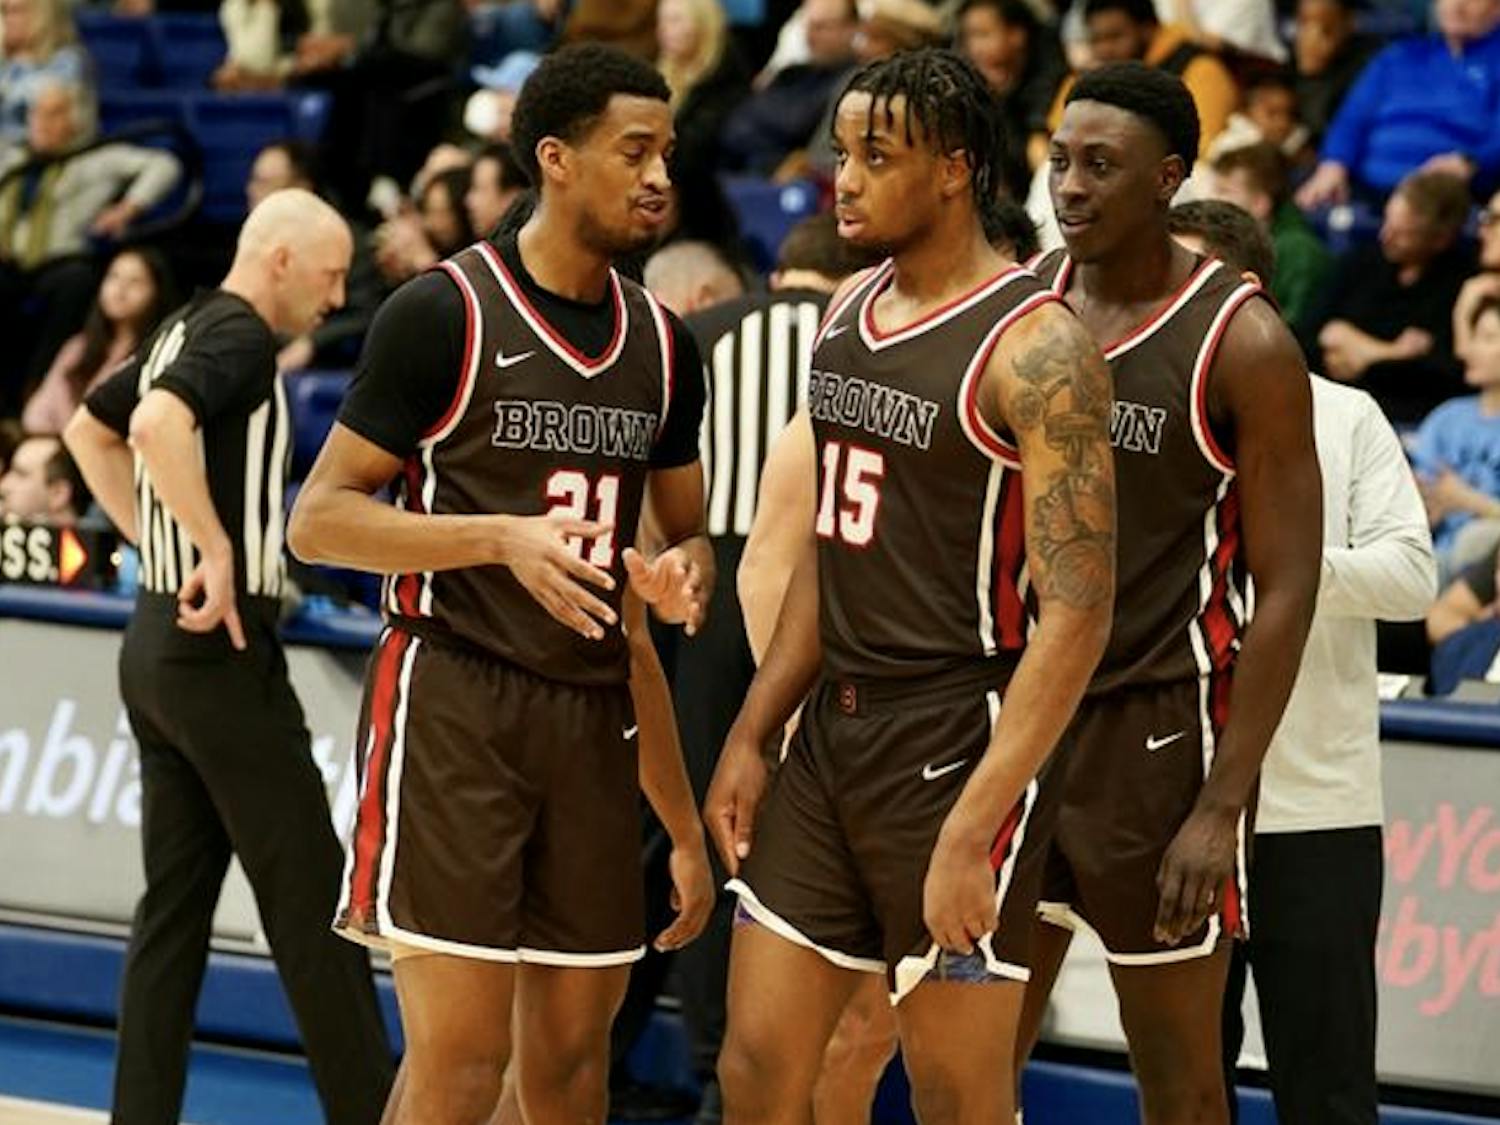 Lawrence_Men's Basketball_CO_JiggShotIt via Brown Athletics